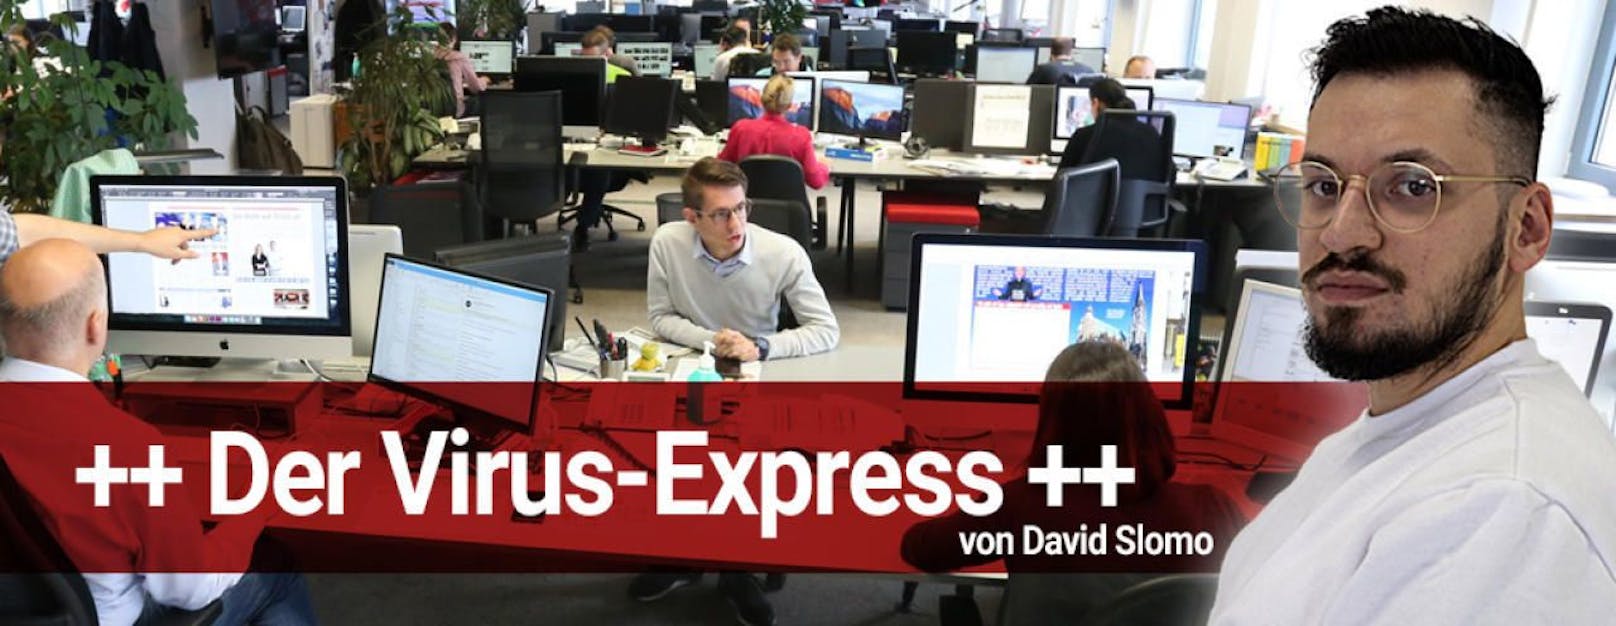 Redakteur David Slomo präsentiert den täglichen Virus-Express